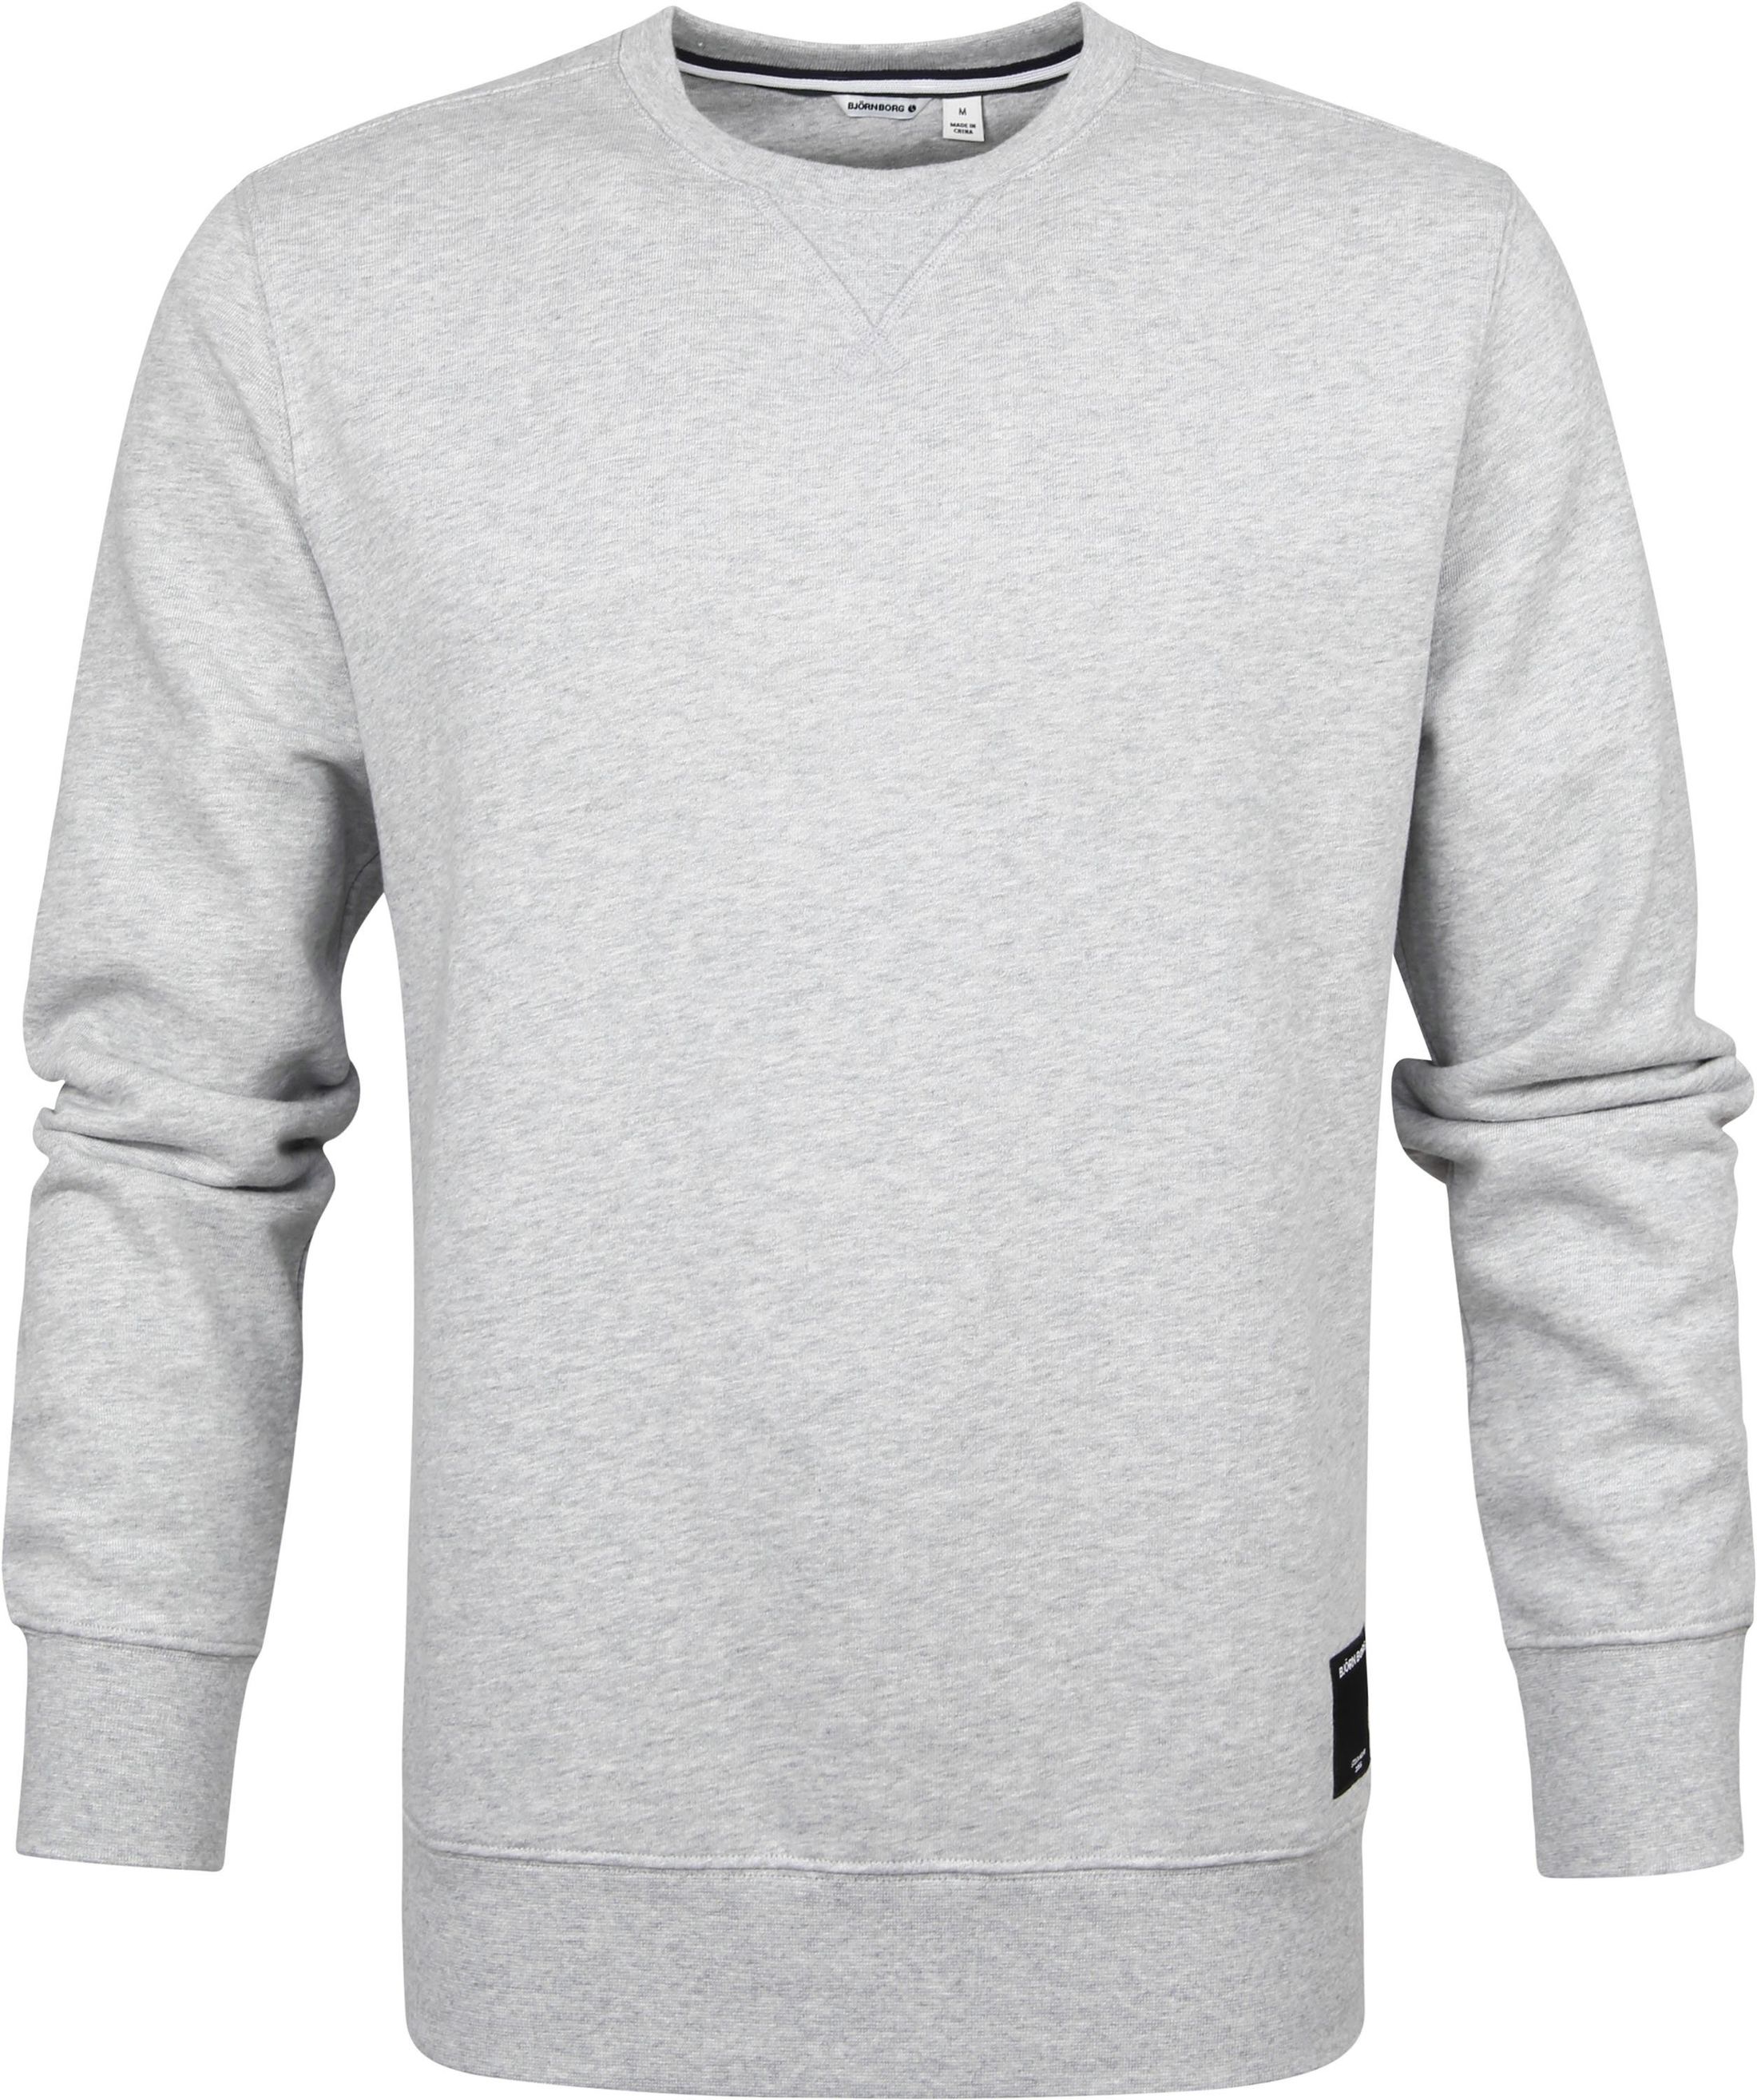 Bjorn Borg Sweater Light Grey size XL